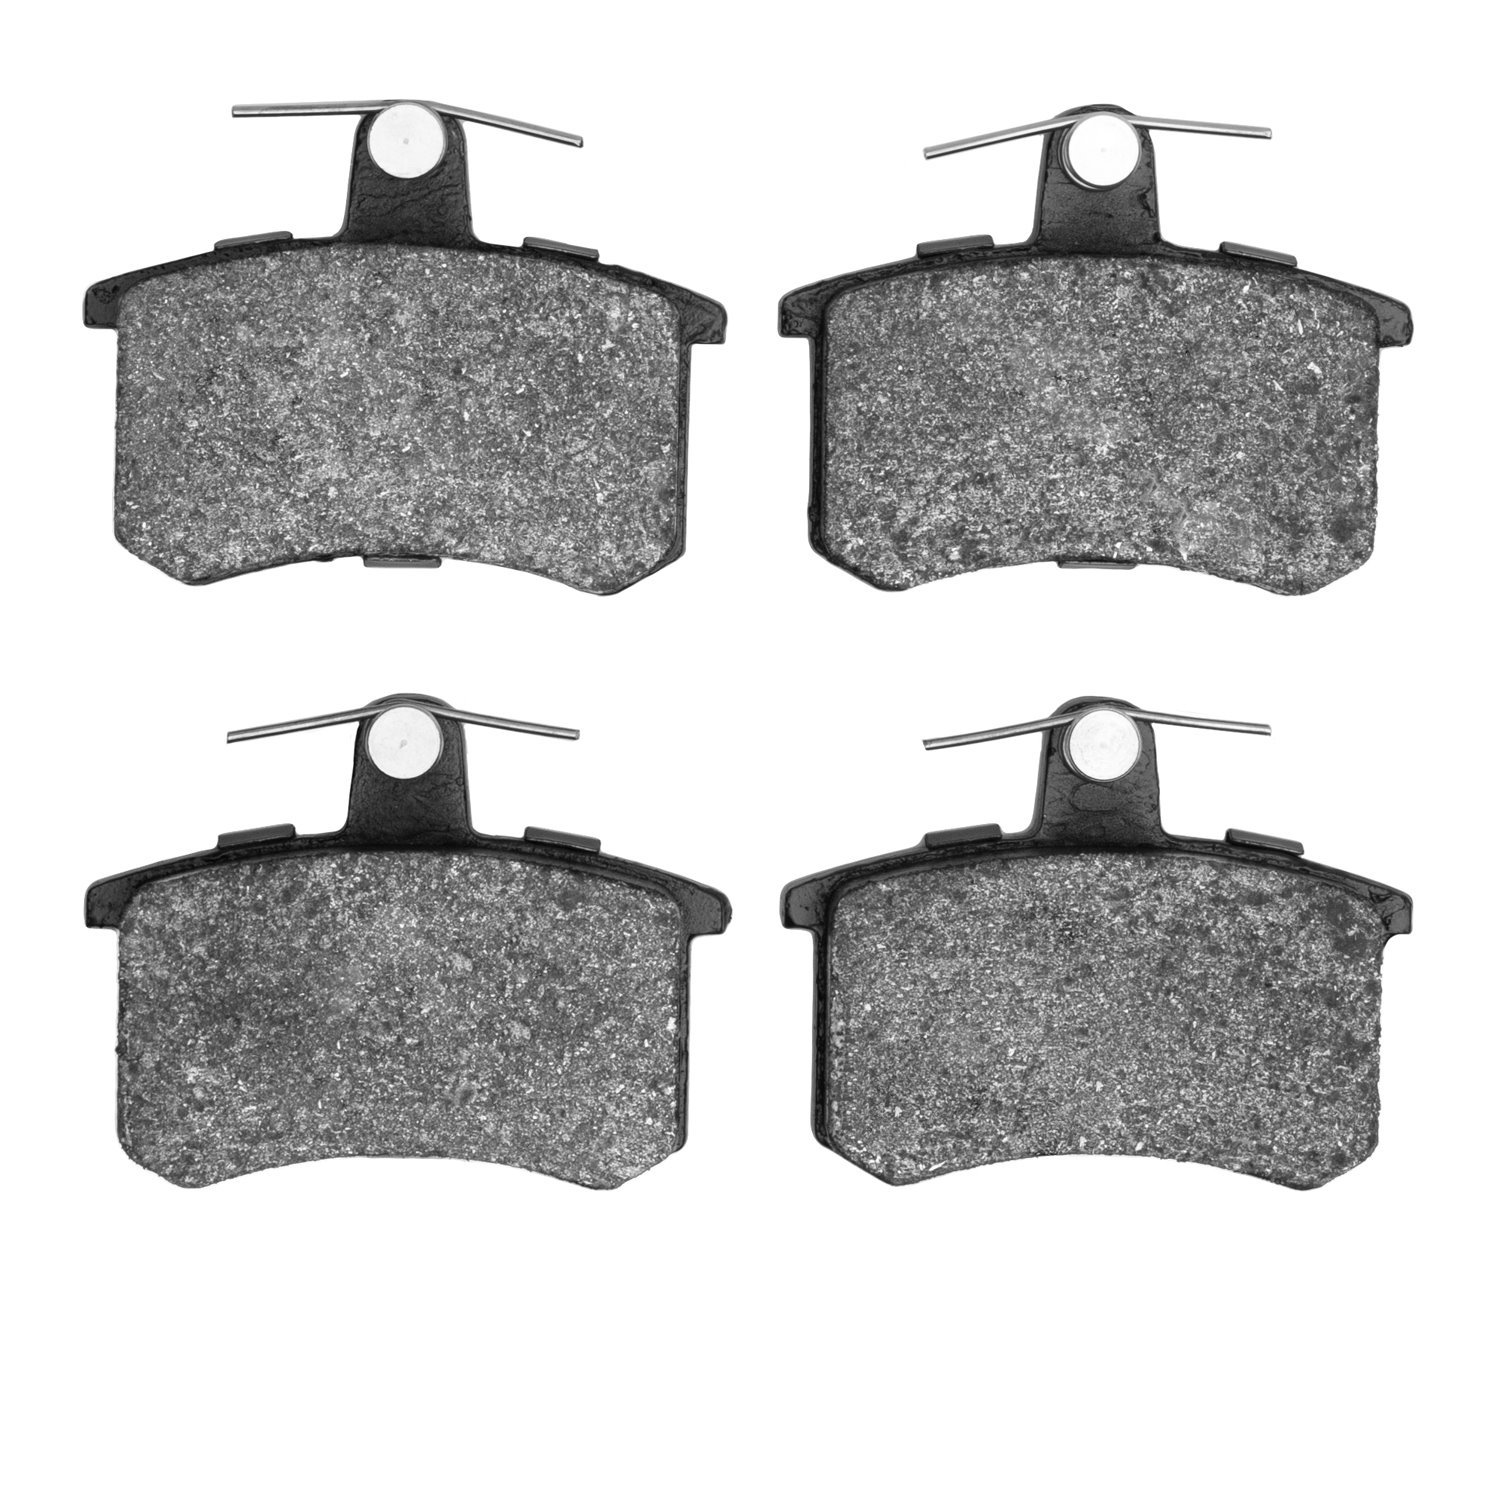 1600-0228-00 5000 Euro Ceramic Brake Pads, 1980-2001 Multiple Makes/Models, Position: Rear